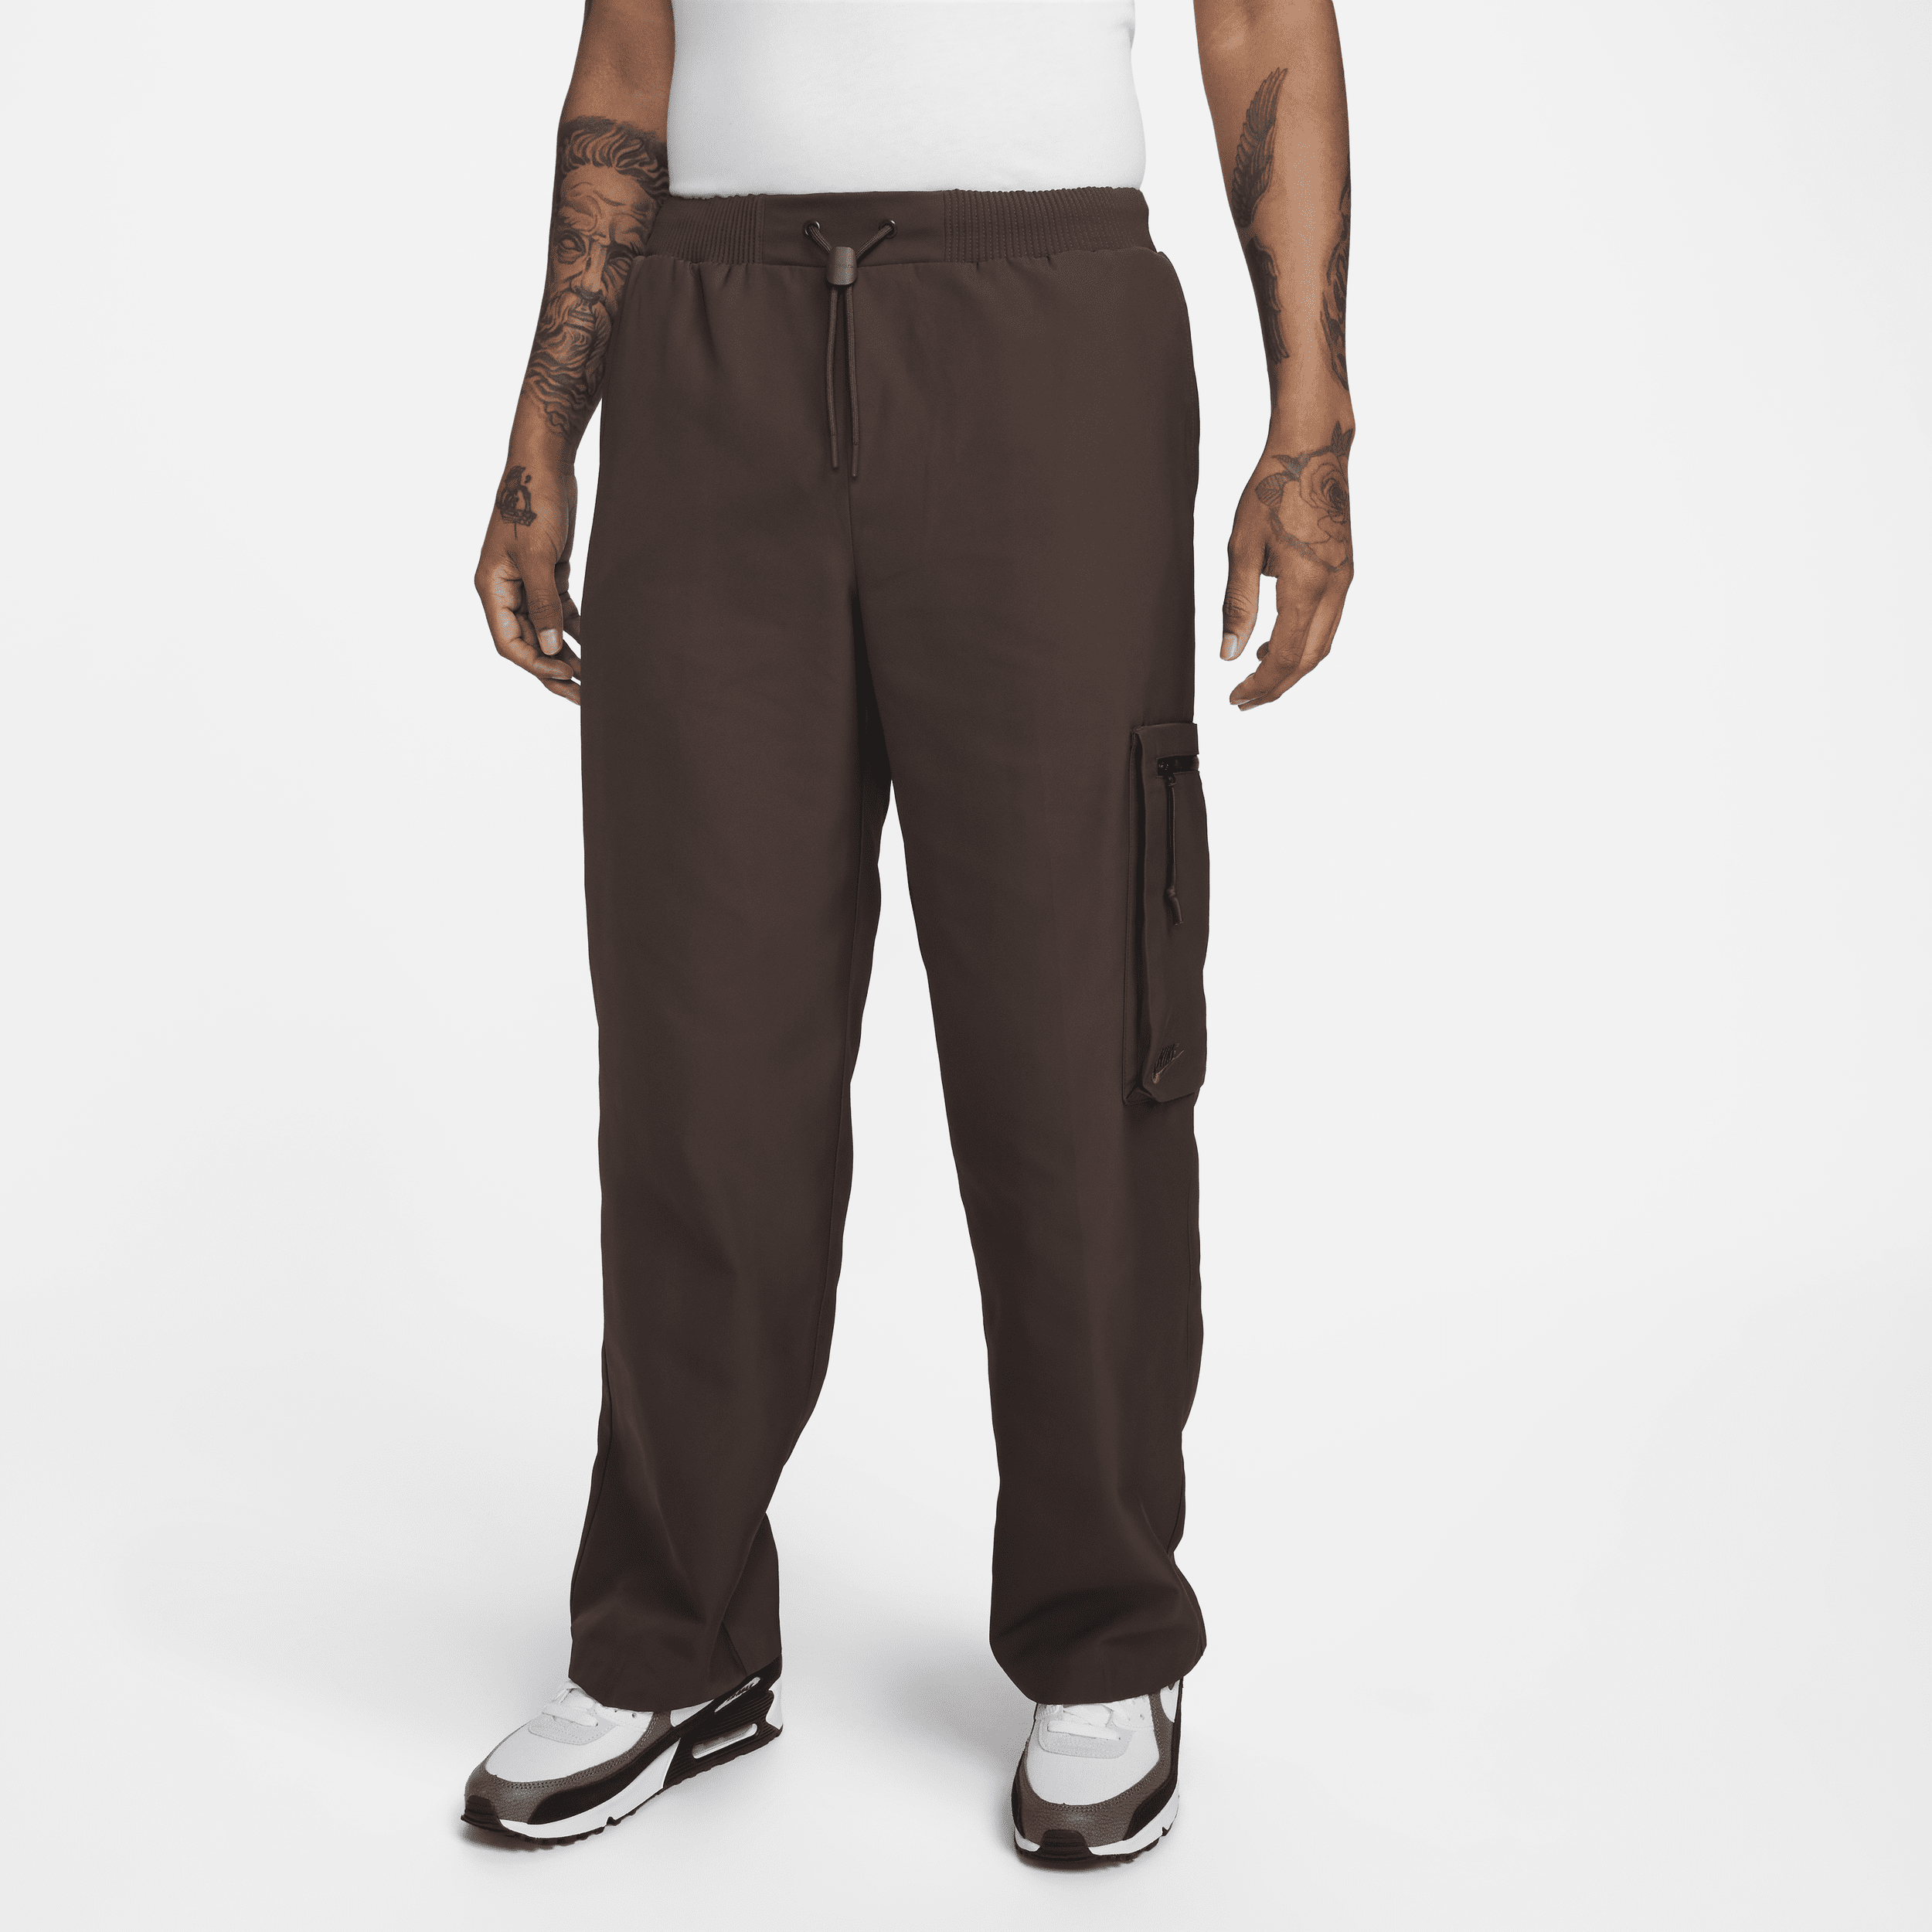 Pantaloni utility in tessuto Nike Sportswear Tech Pack – Uomo - Marrone